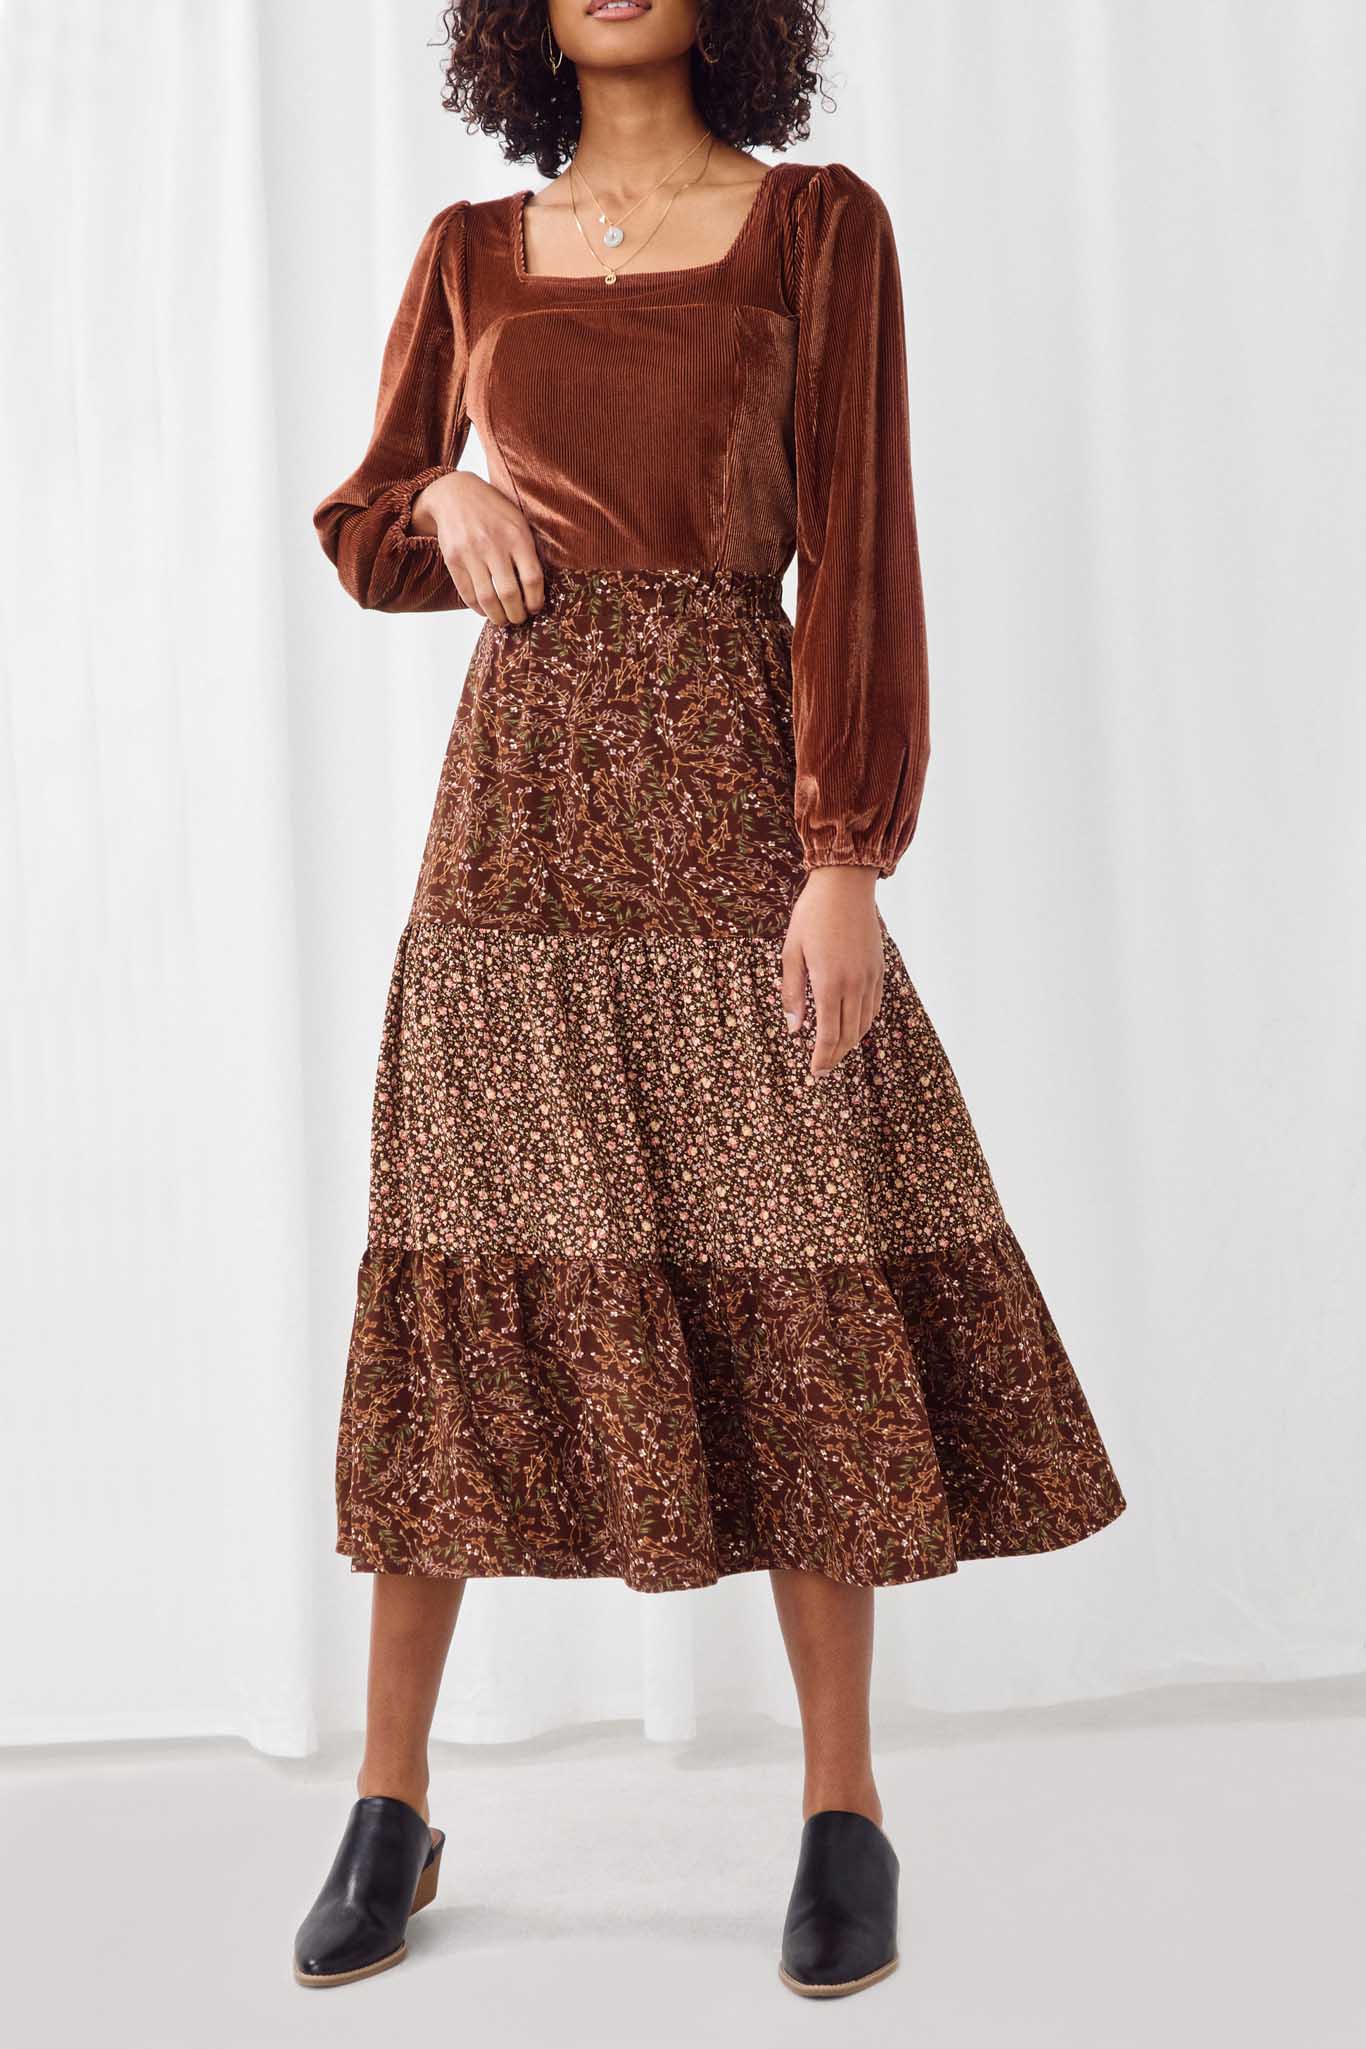 HY5342 BROWN Womens Floral Block Elastic Waist Midi Skirt Detail